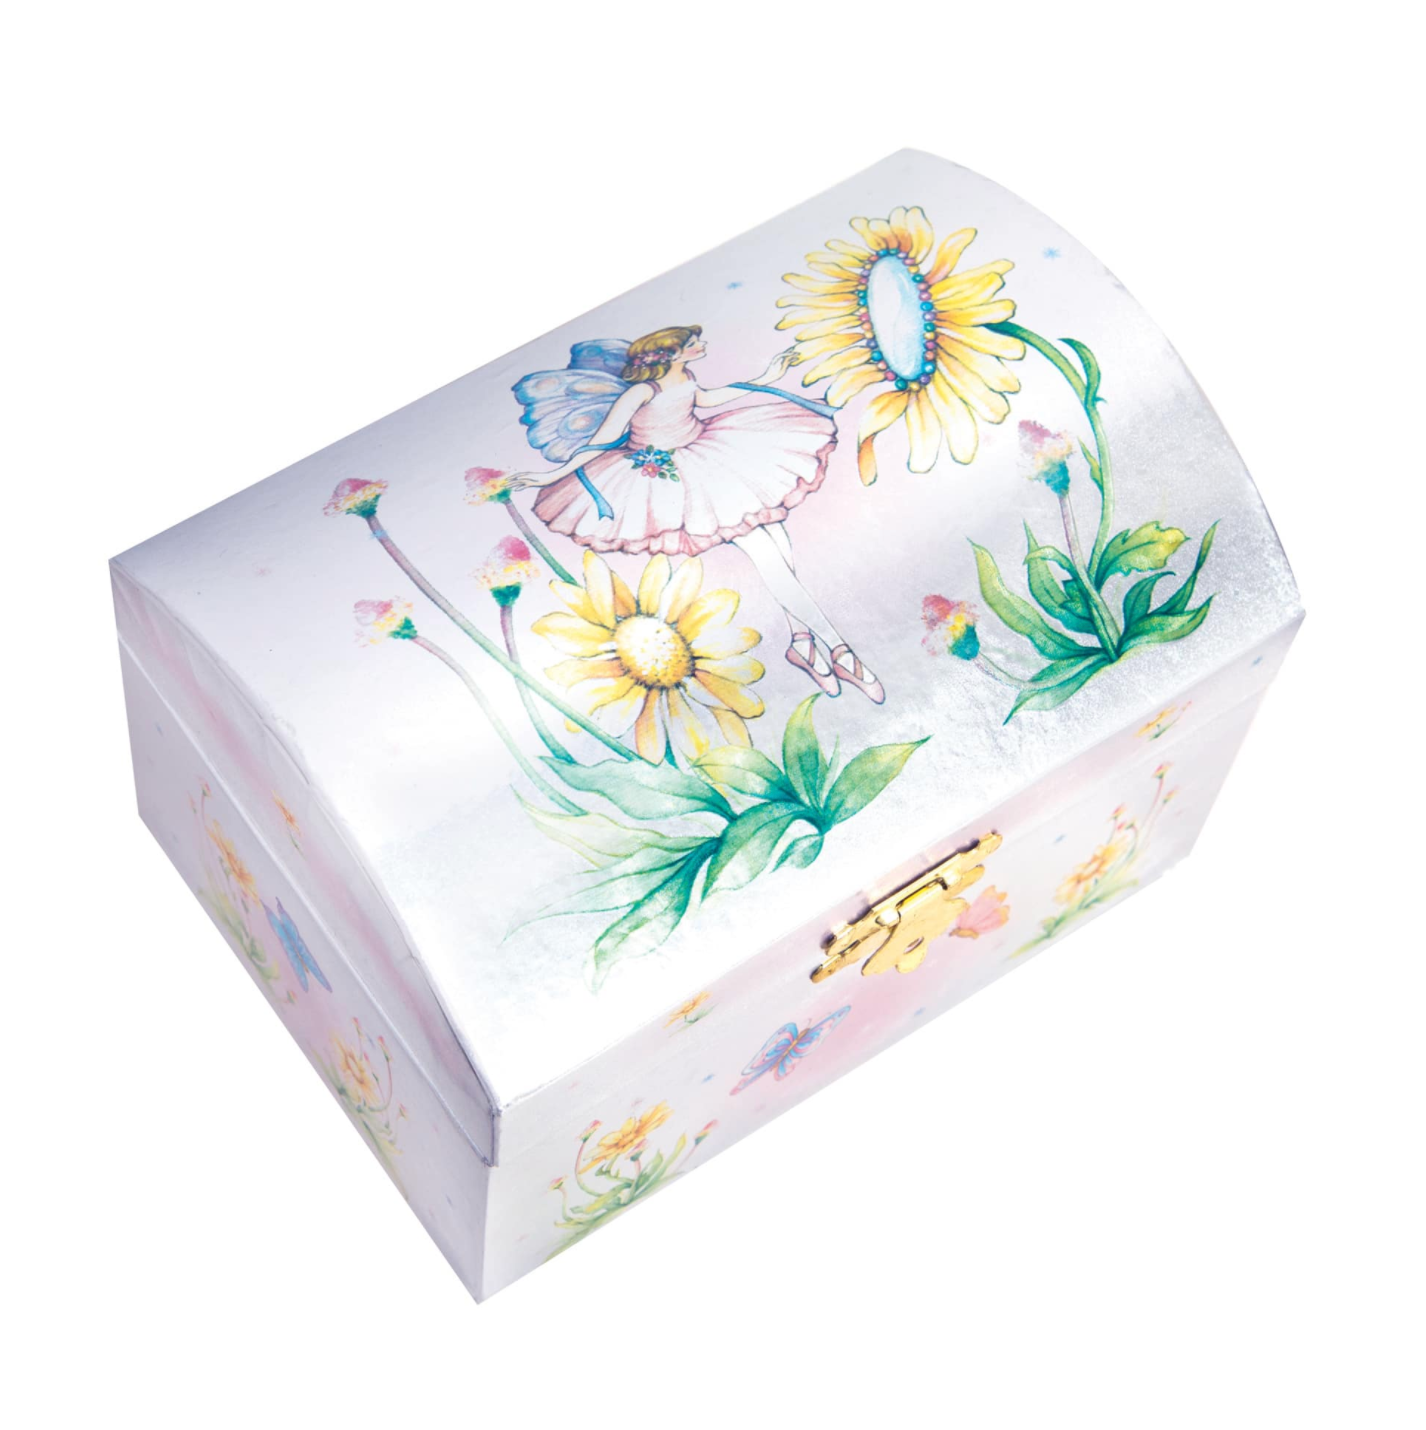 Iridescent Fairy Jewelry Box - Schylling